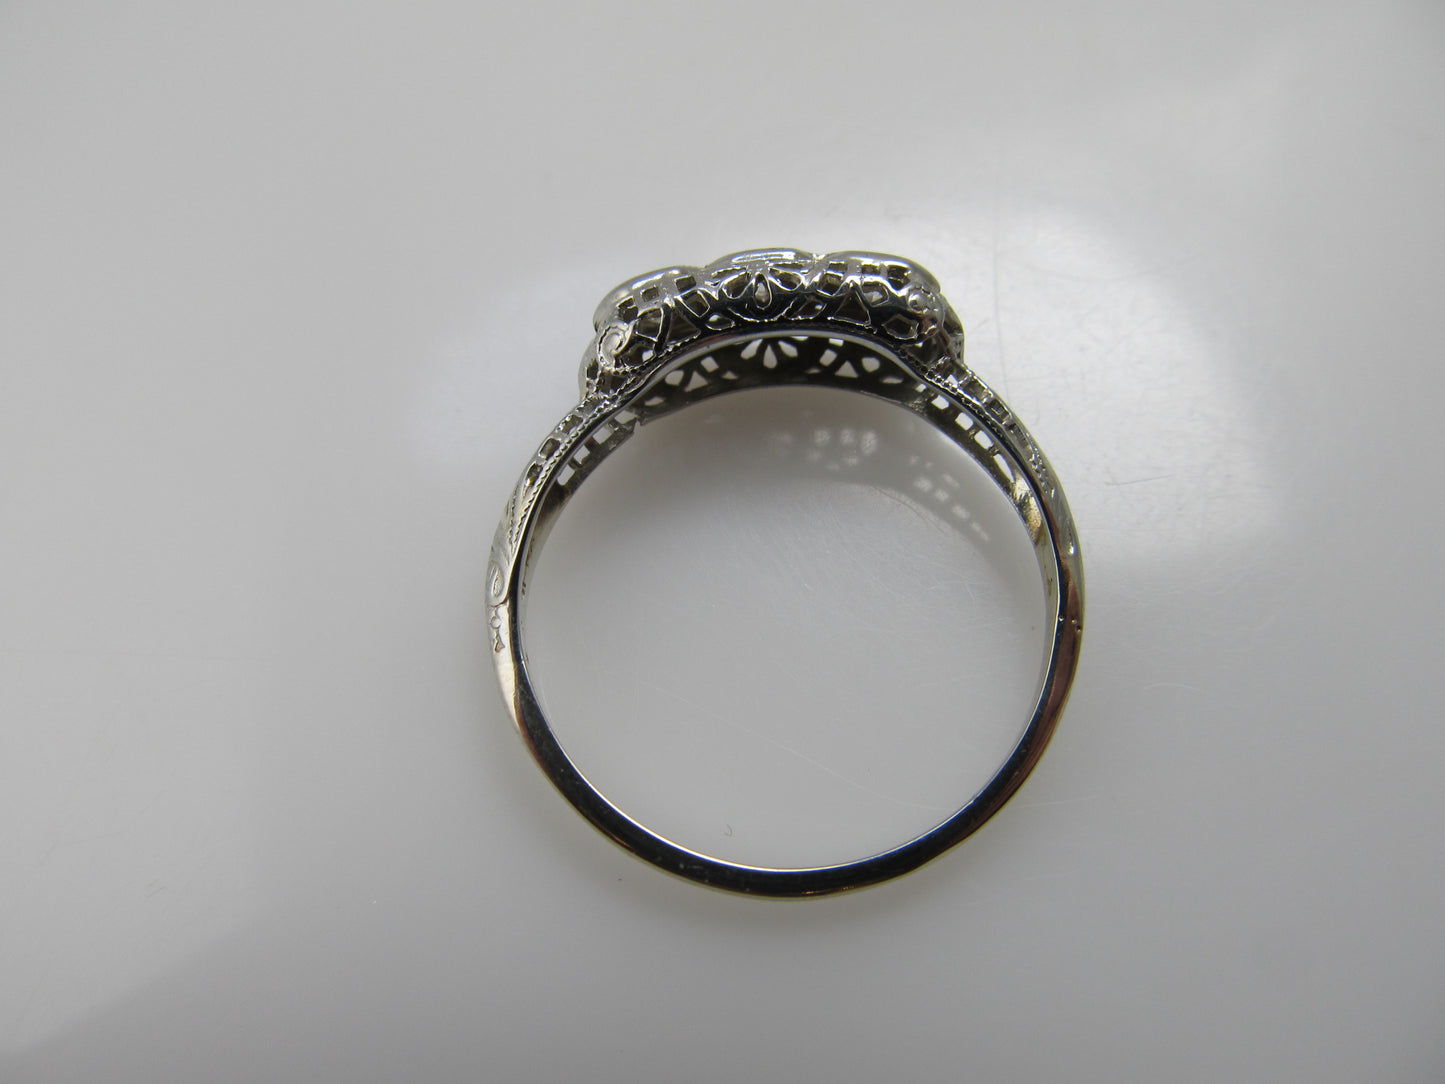 Antique filigree 3 stone diamond ring